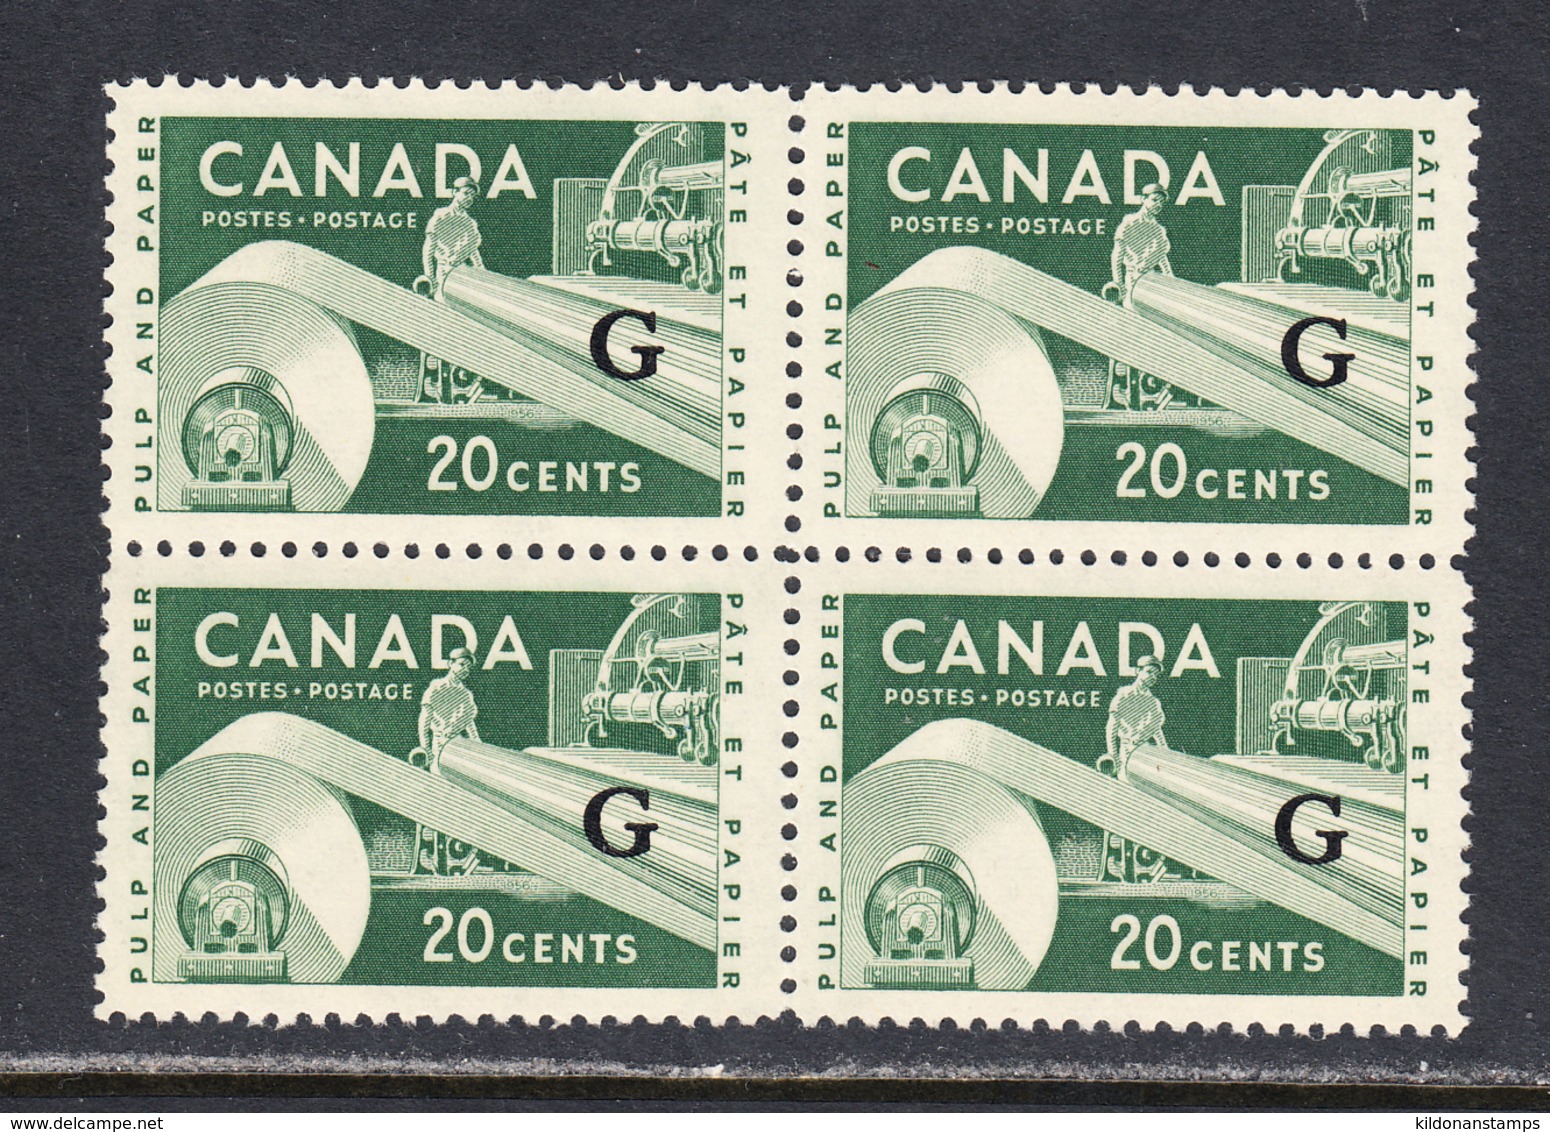 Canada 1955-62 Official, Mint No Hinge, Block, Sc# O45, SG O207 - Aufdrucksausgaben